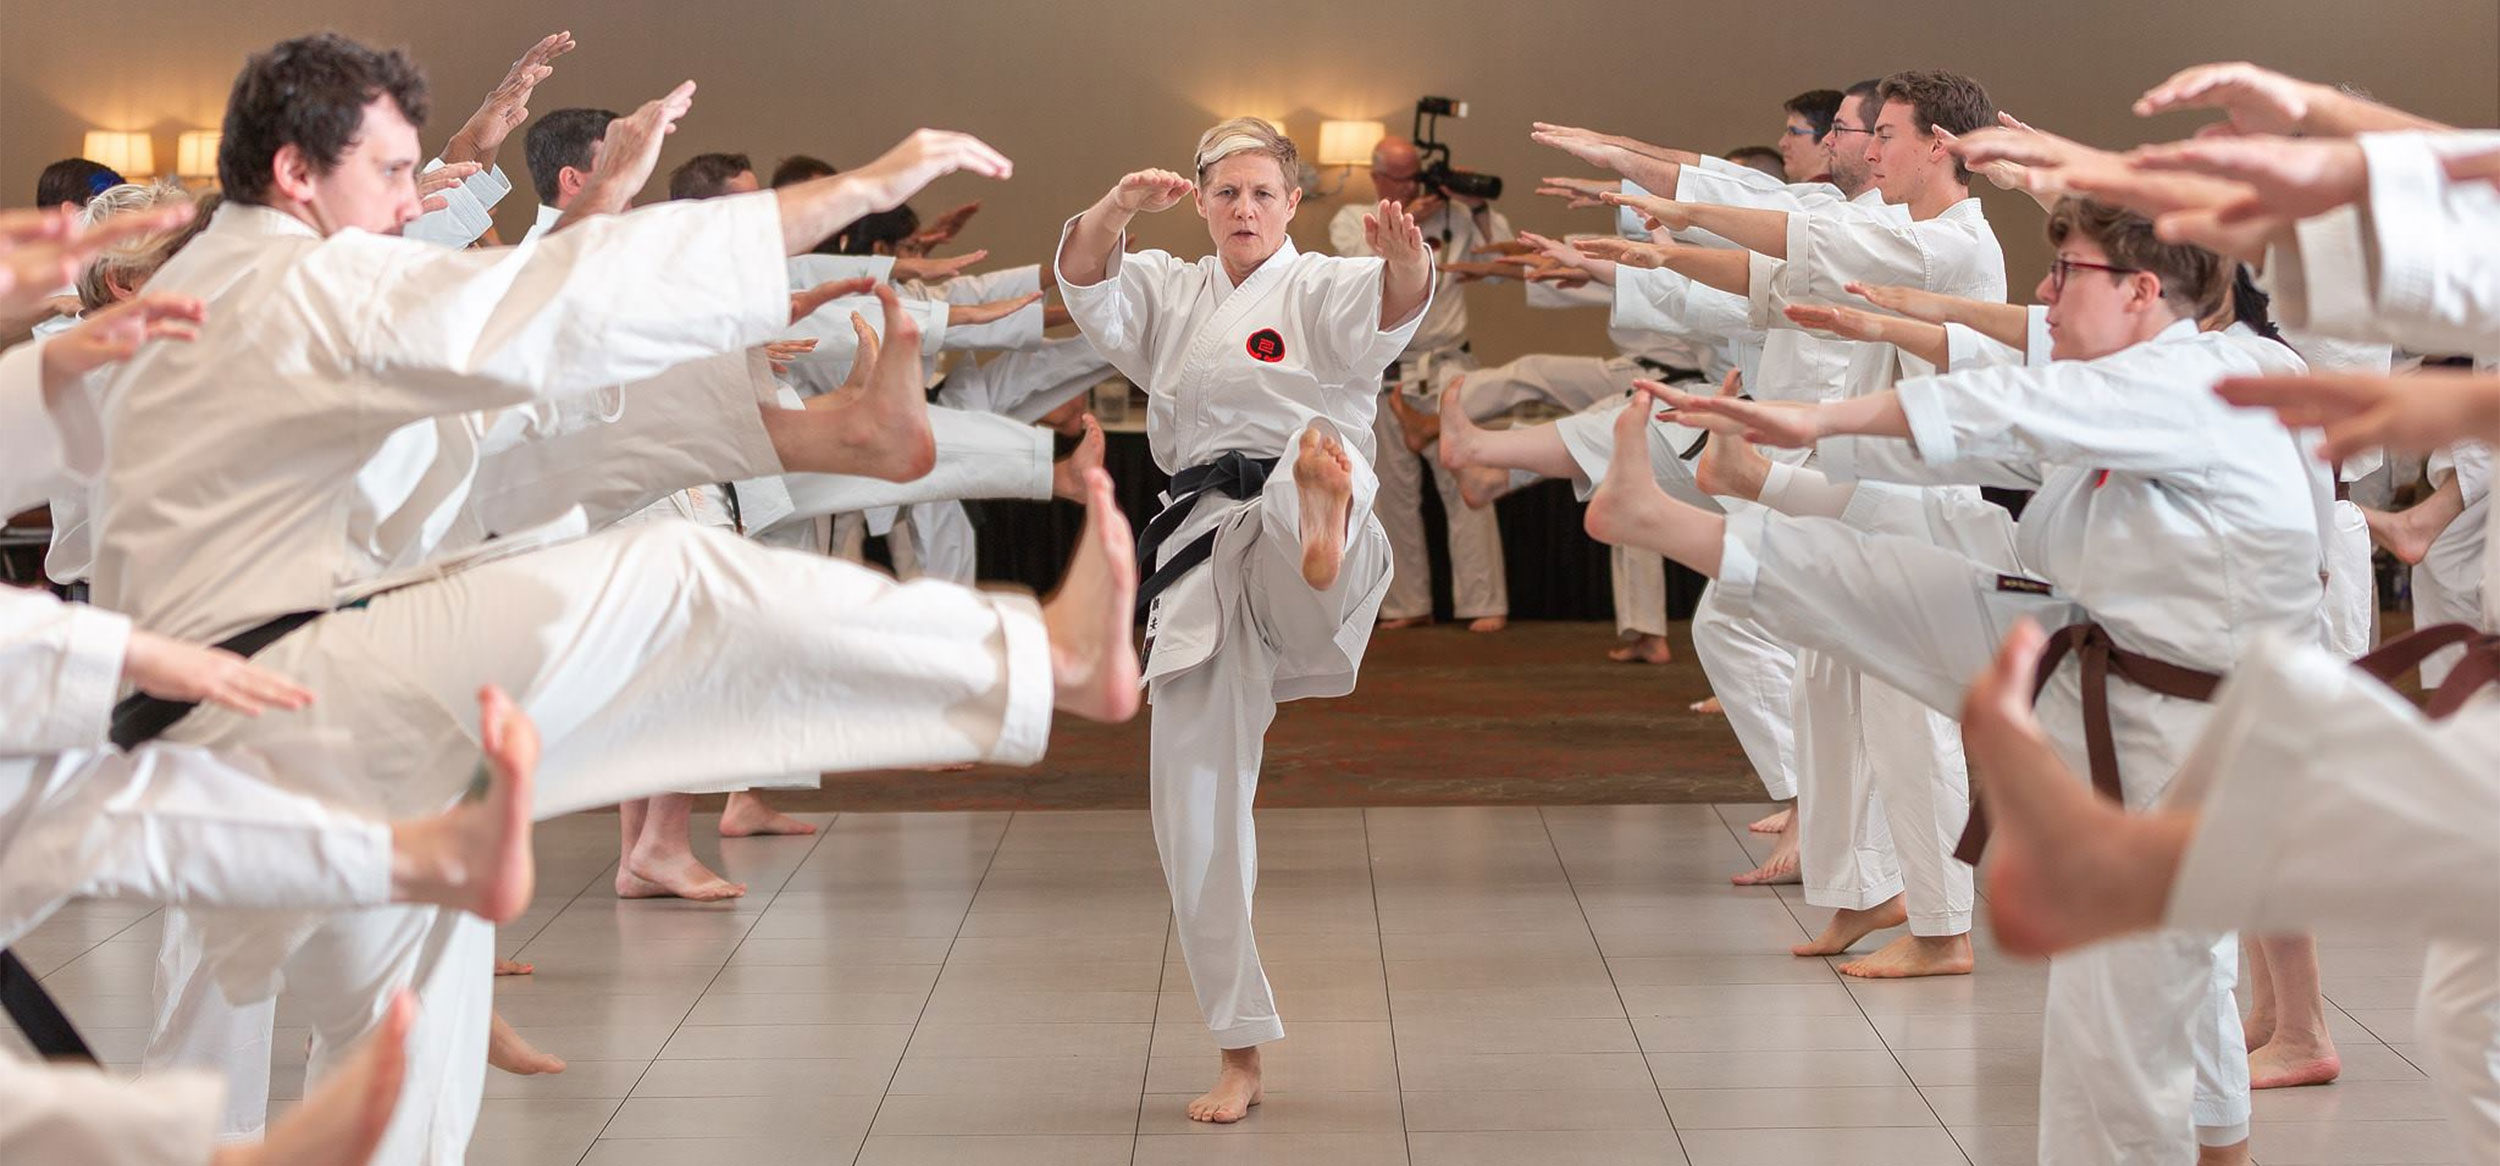 South West London Karate Classes